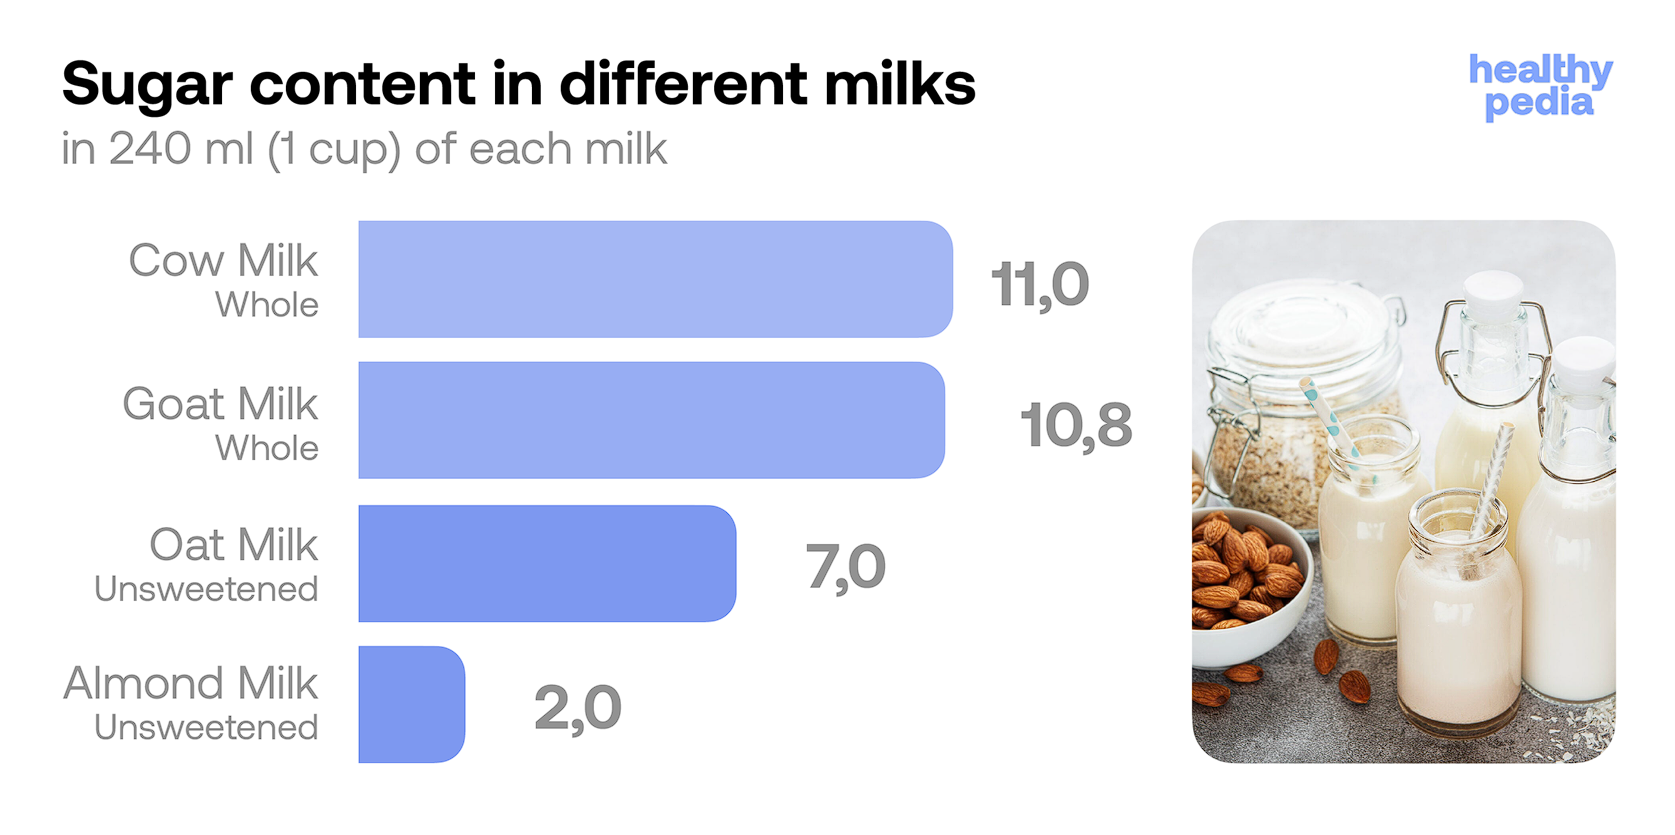 Sugar content in different milks, stats